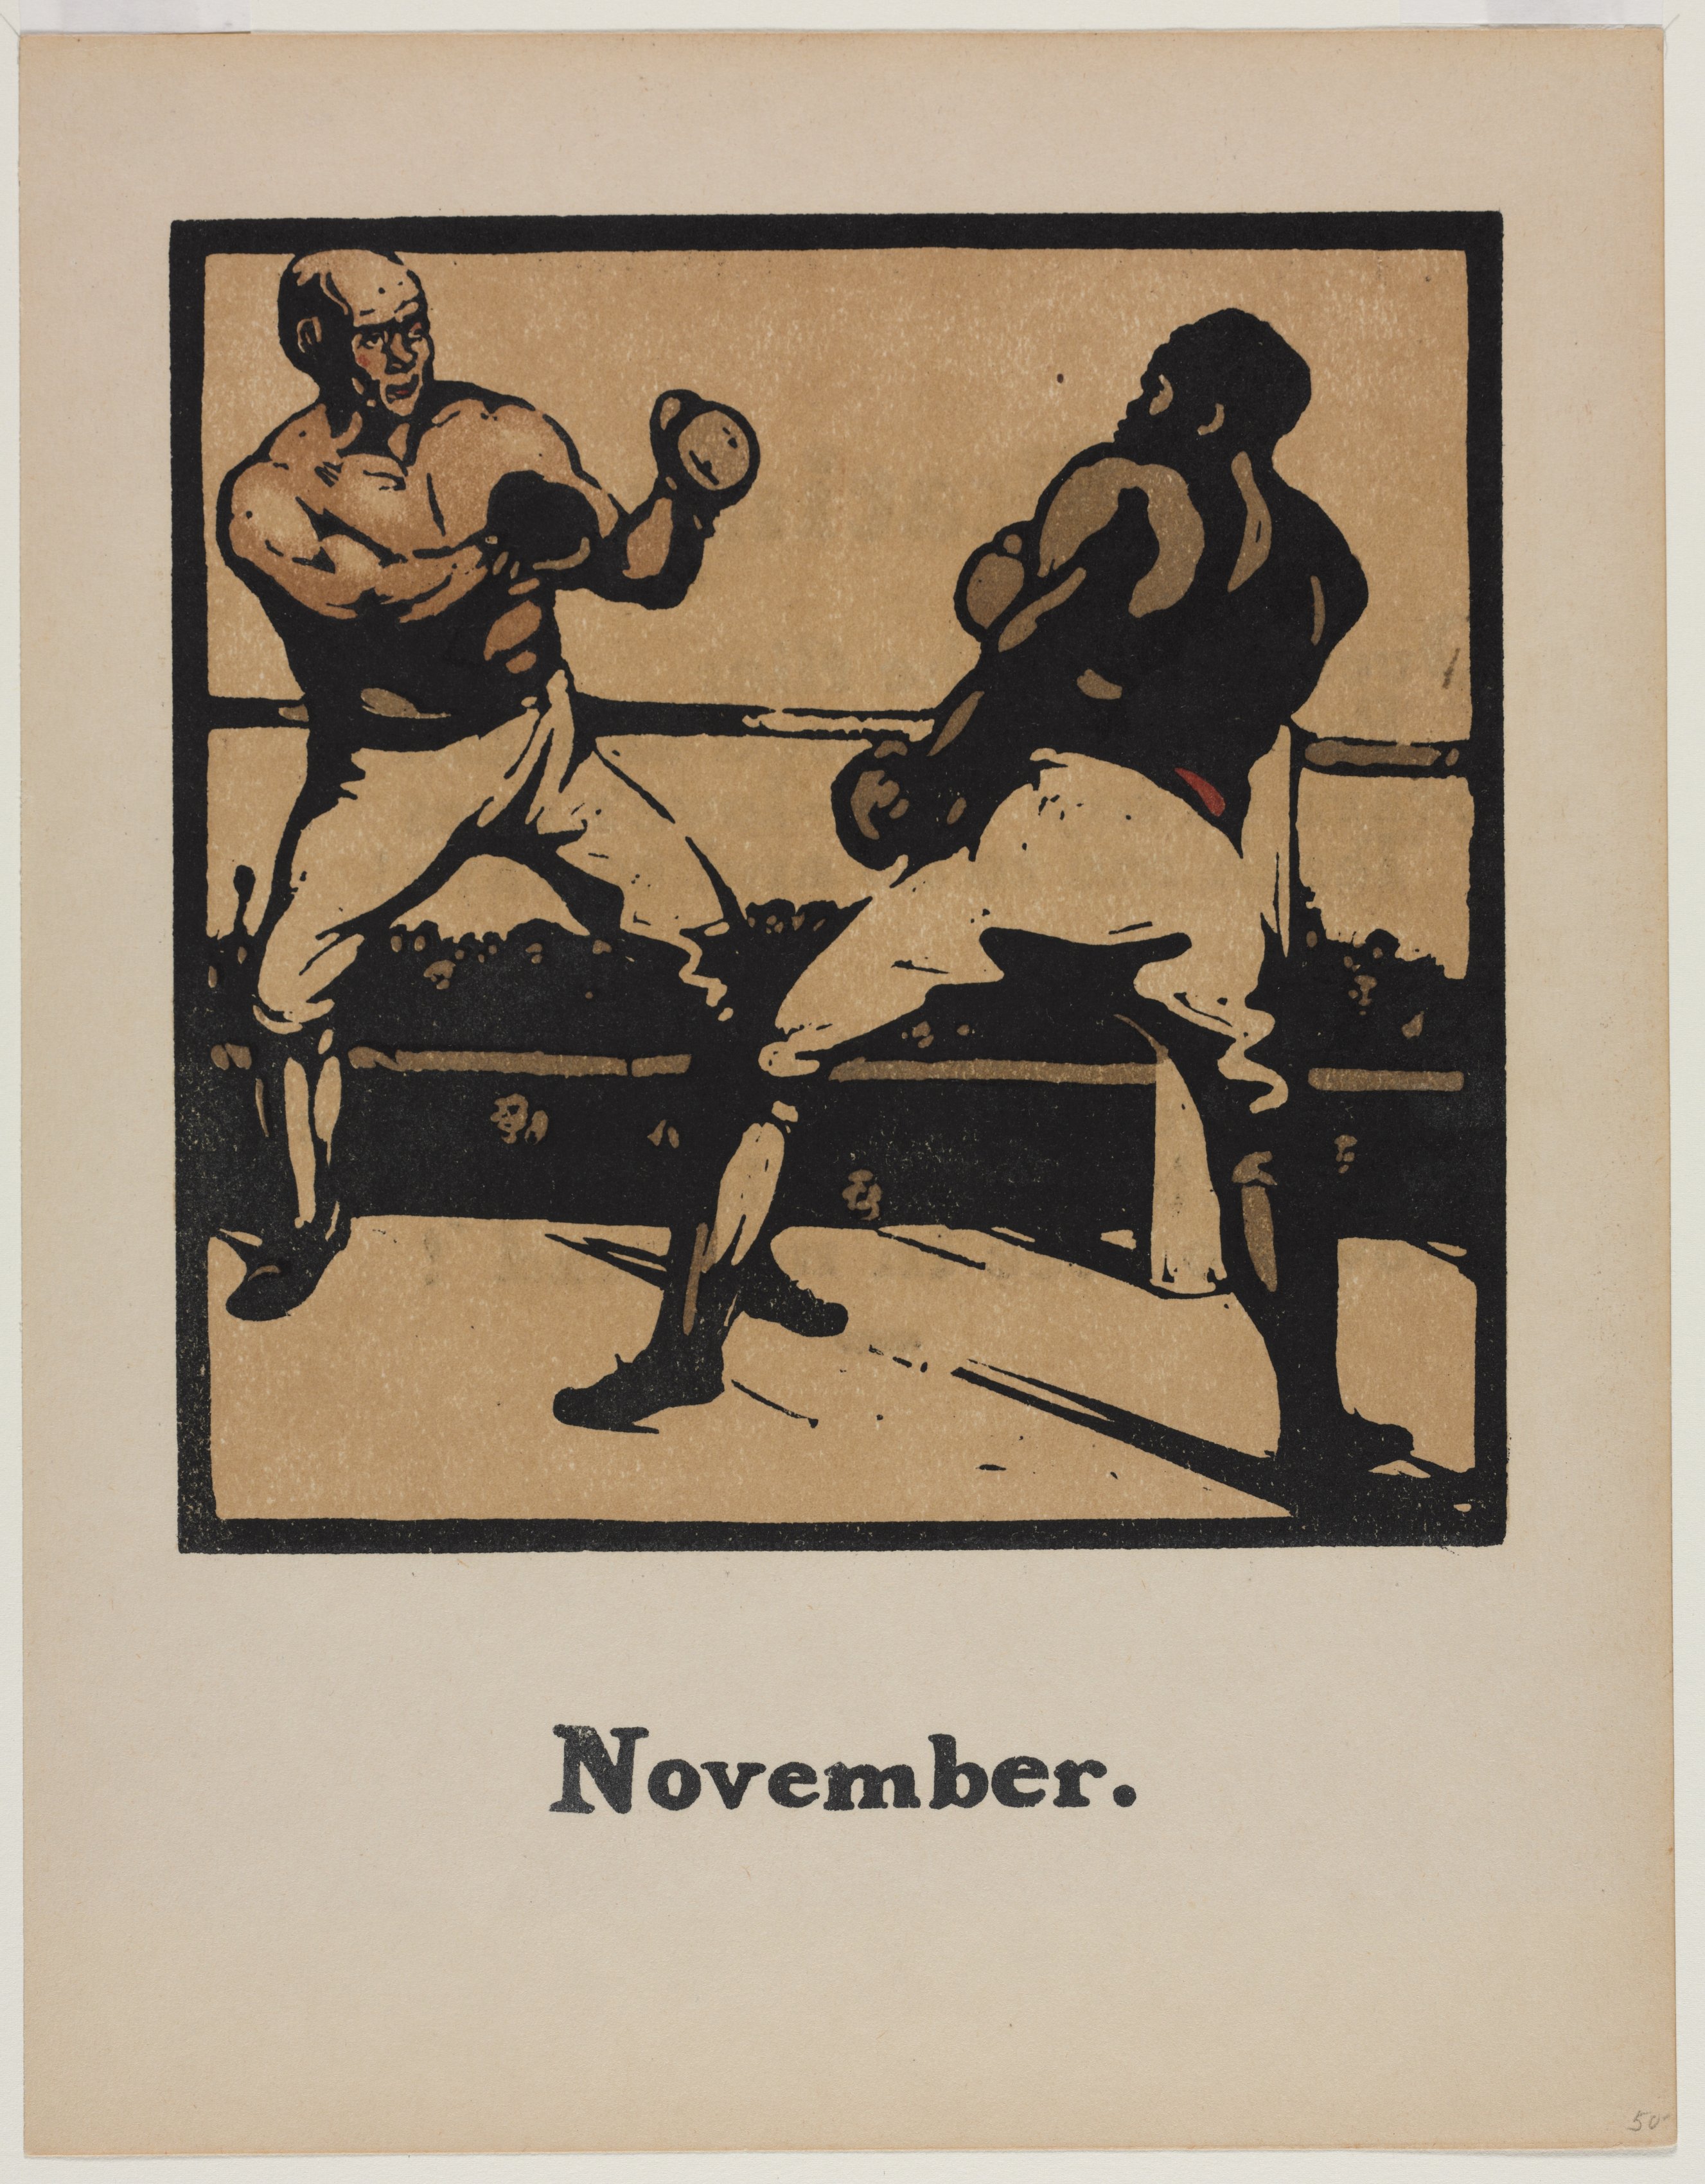 An Almanac of Twelve Sports: Boxing